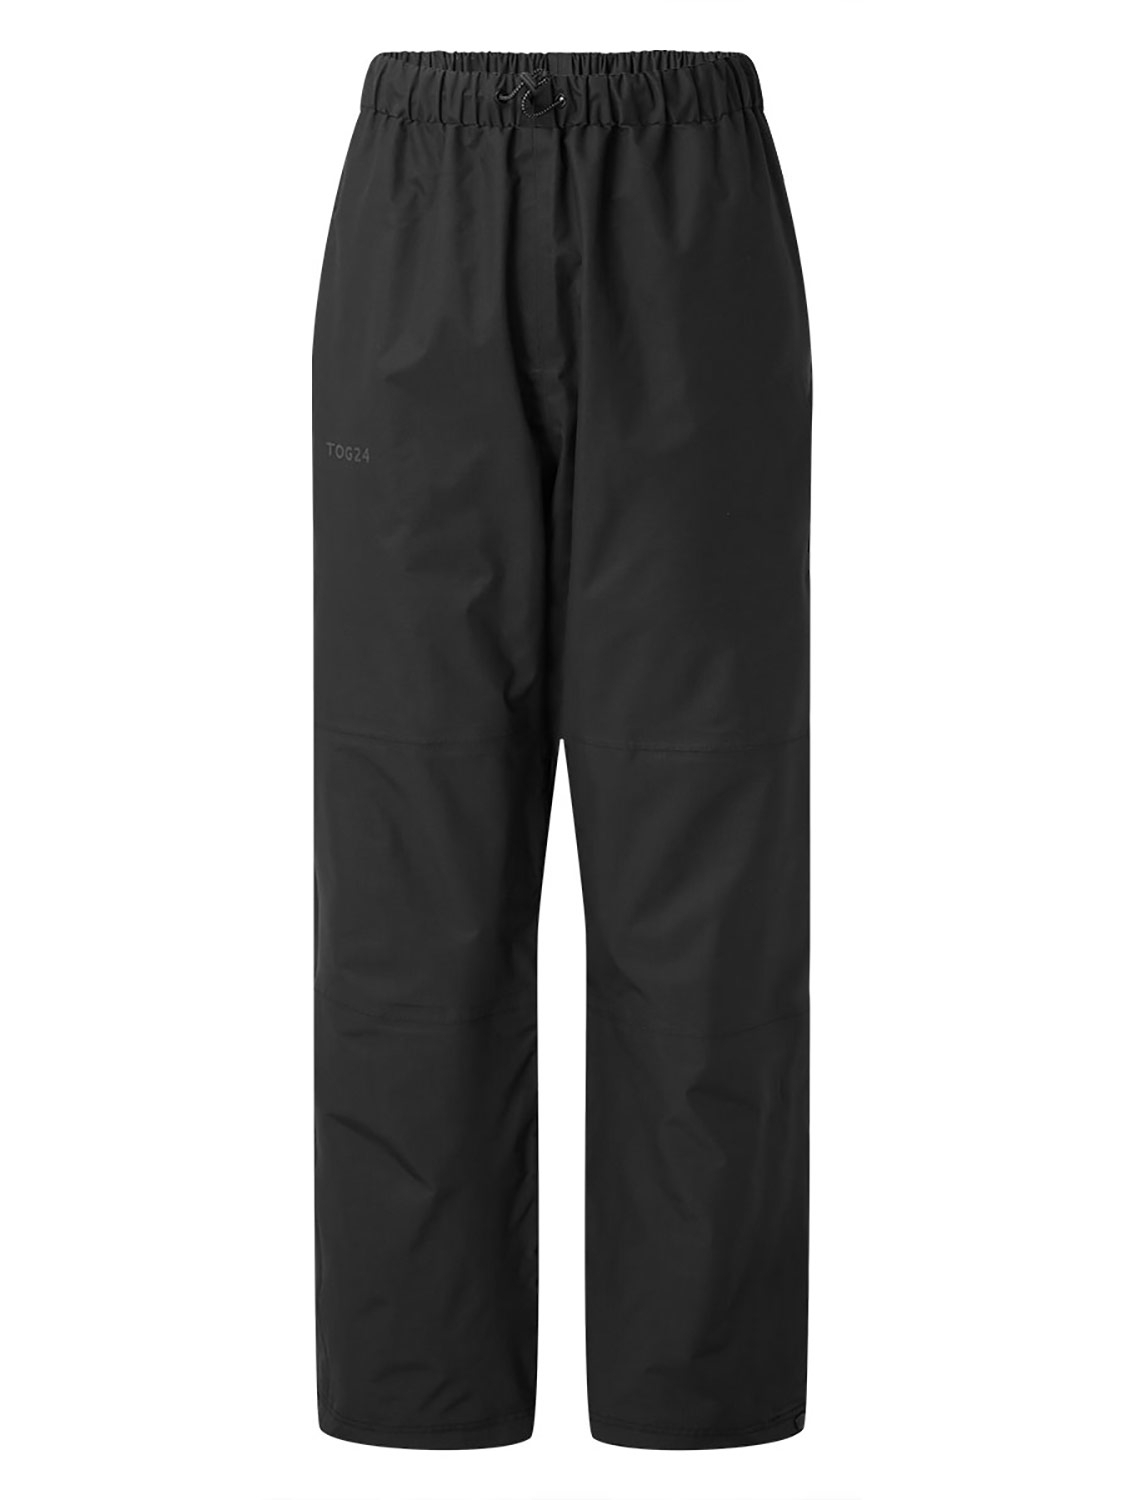 Steward Waterproof Trousers Short - Size: 12 Black Tog24